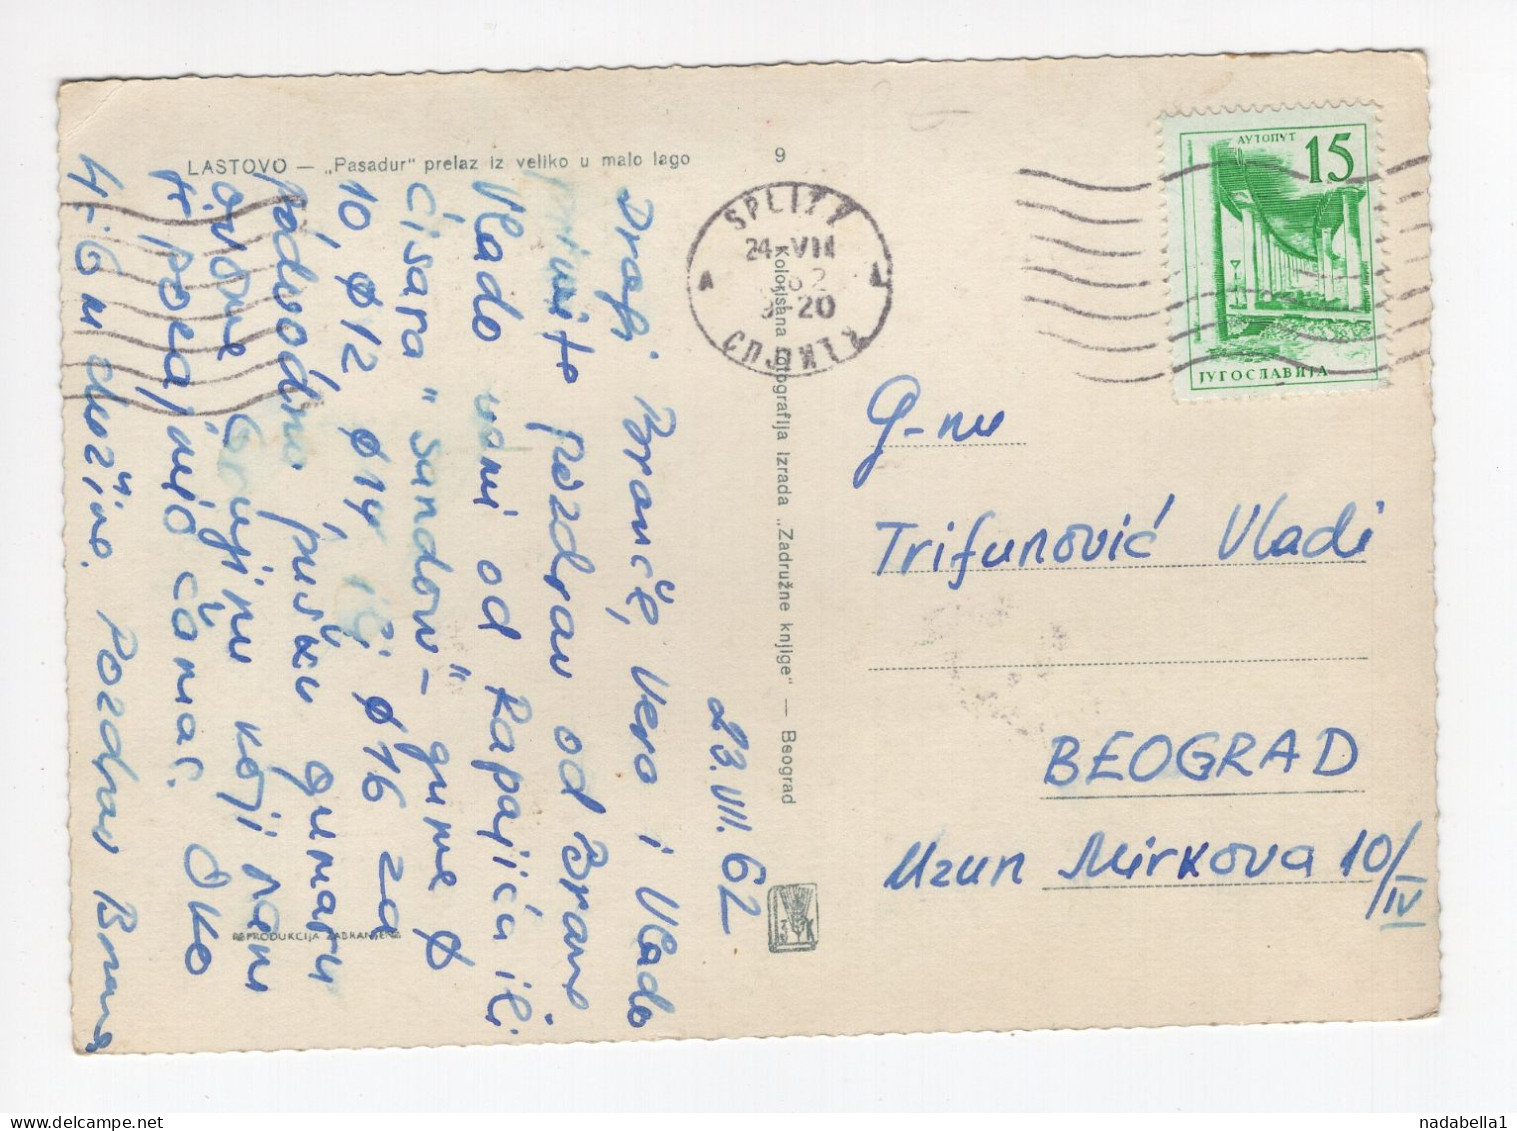 1962. YUGOSLAVIA,CROATIA,LASTOVO,PASADUR,POSTCARD,USED - Yougoslavie